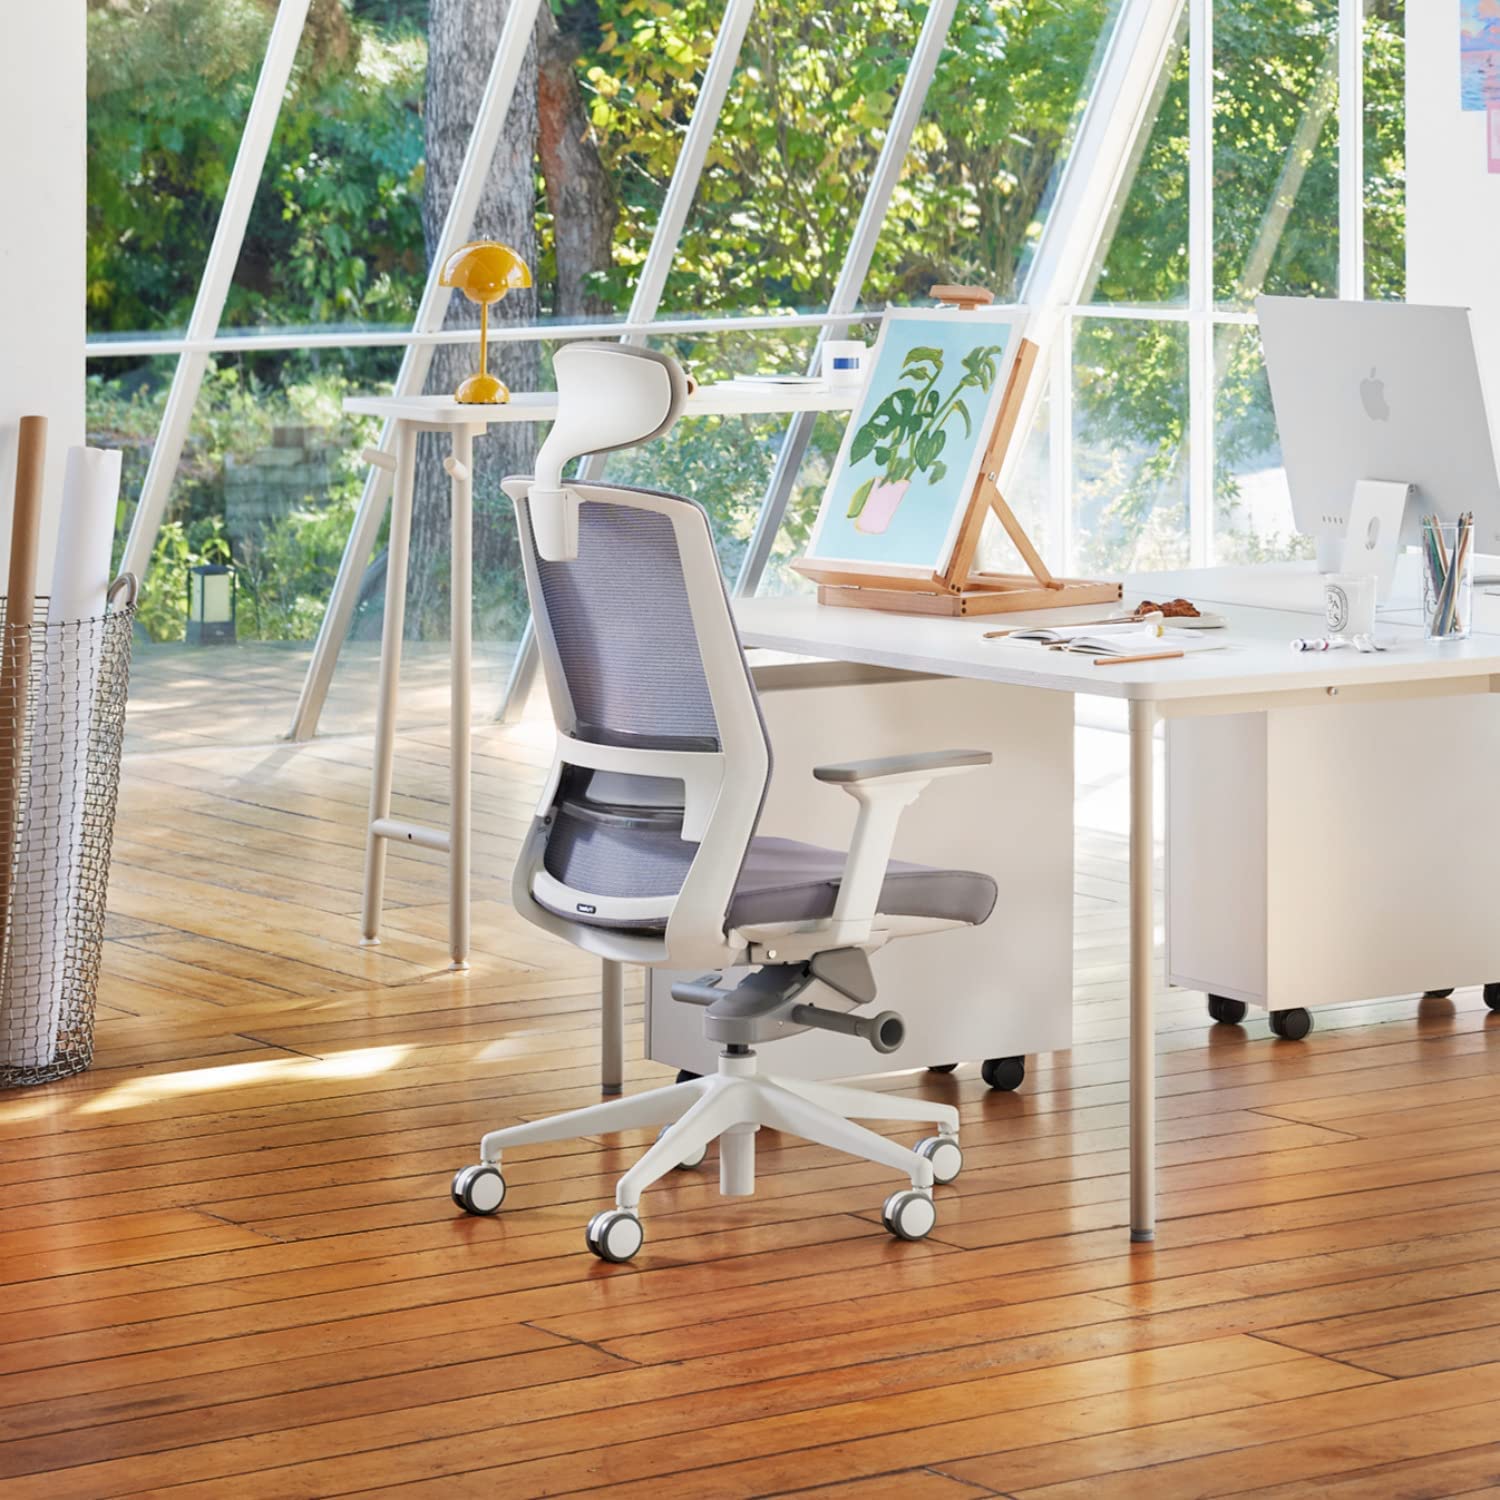 Office Chair - Ergonomic, High Back,  3-Way Armrest, Adjustable Seat Depth & Lumbar Support